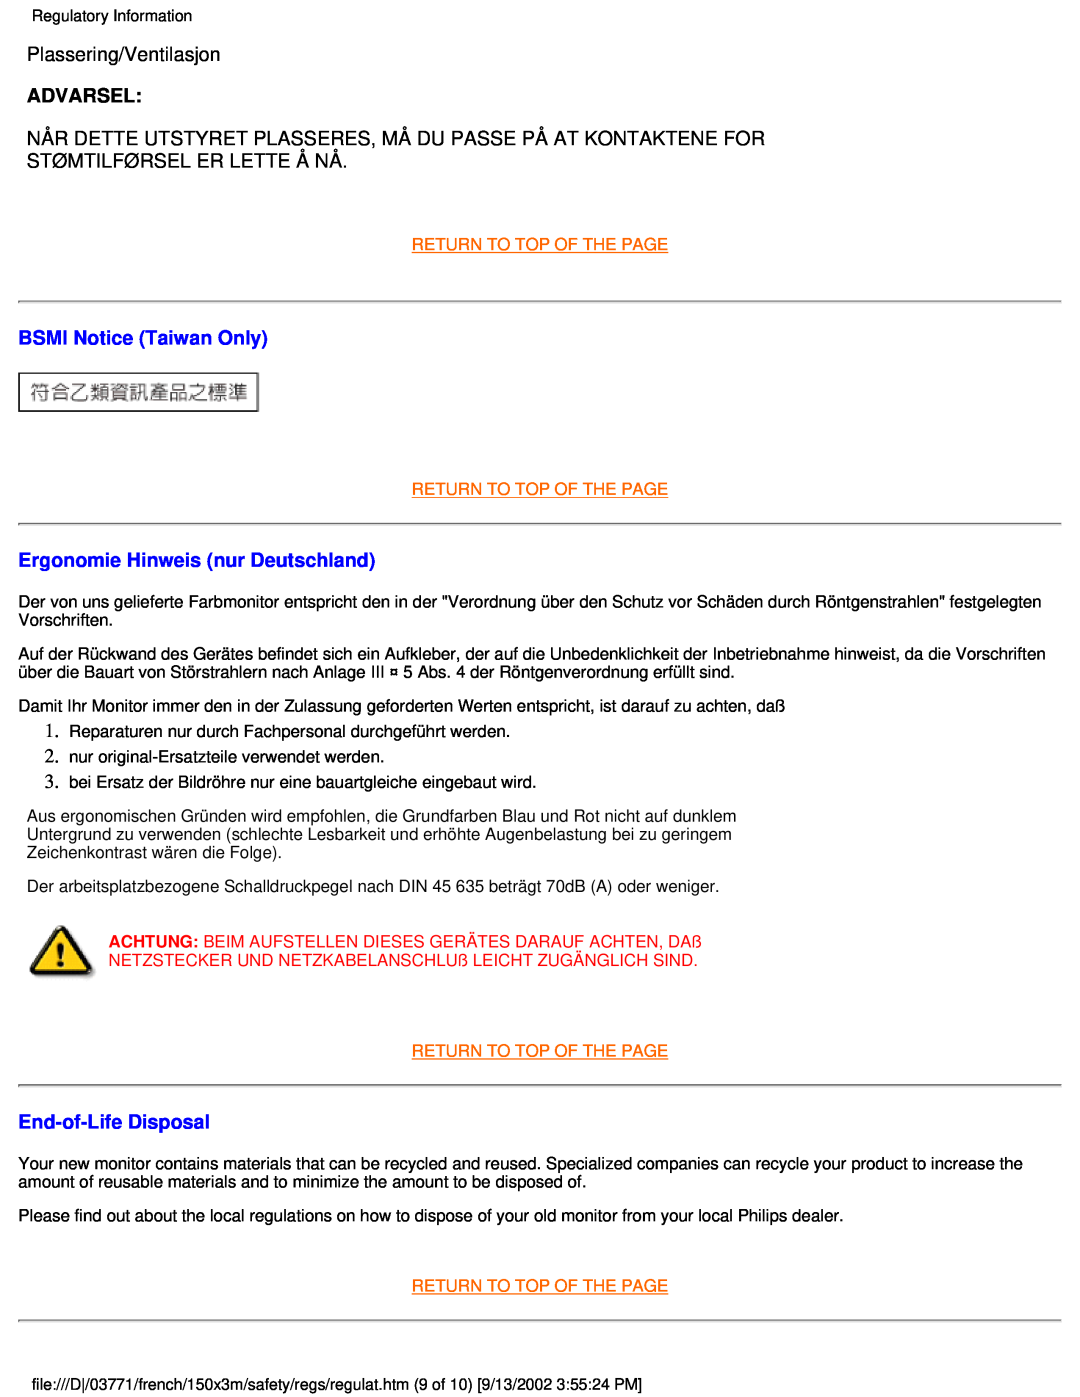 Philips 150X3M user manual Advarsel, BSMI Notice Taiwan Only, Ergonomie Hinweis nur Deutschland, End-of-Life Disposal 